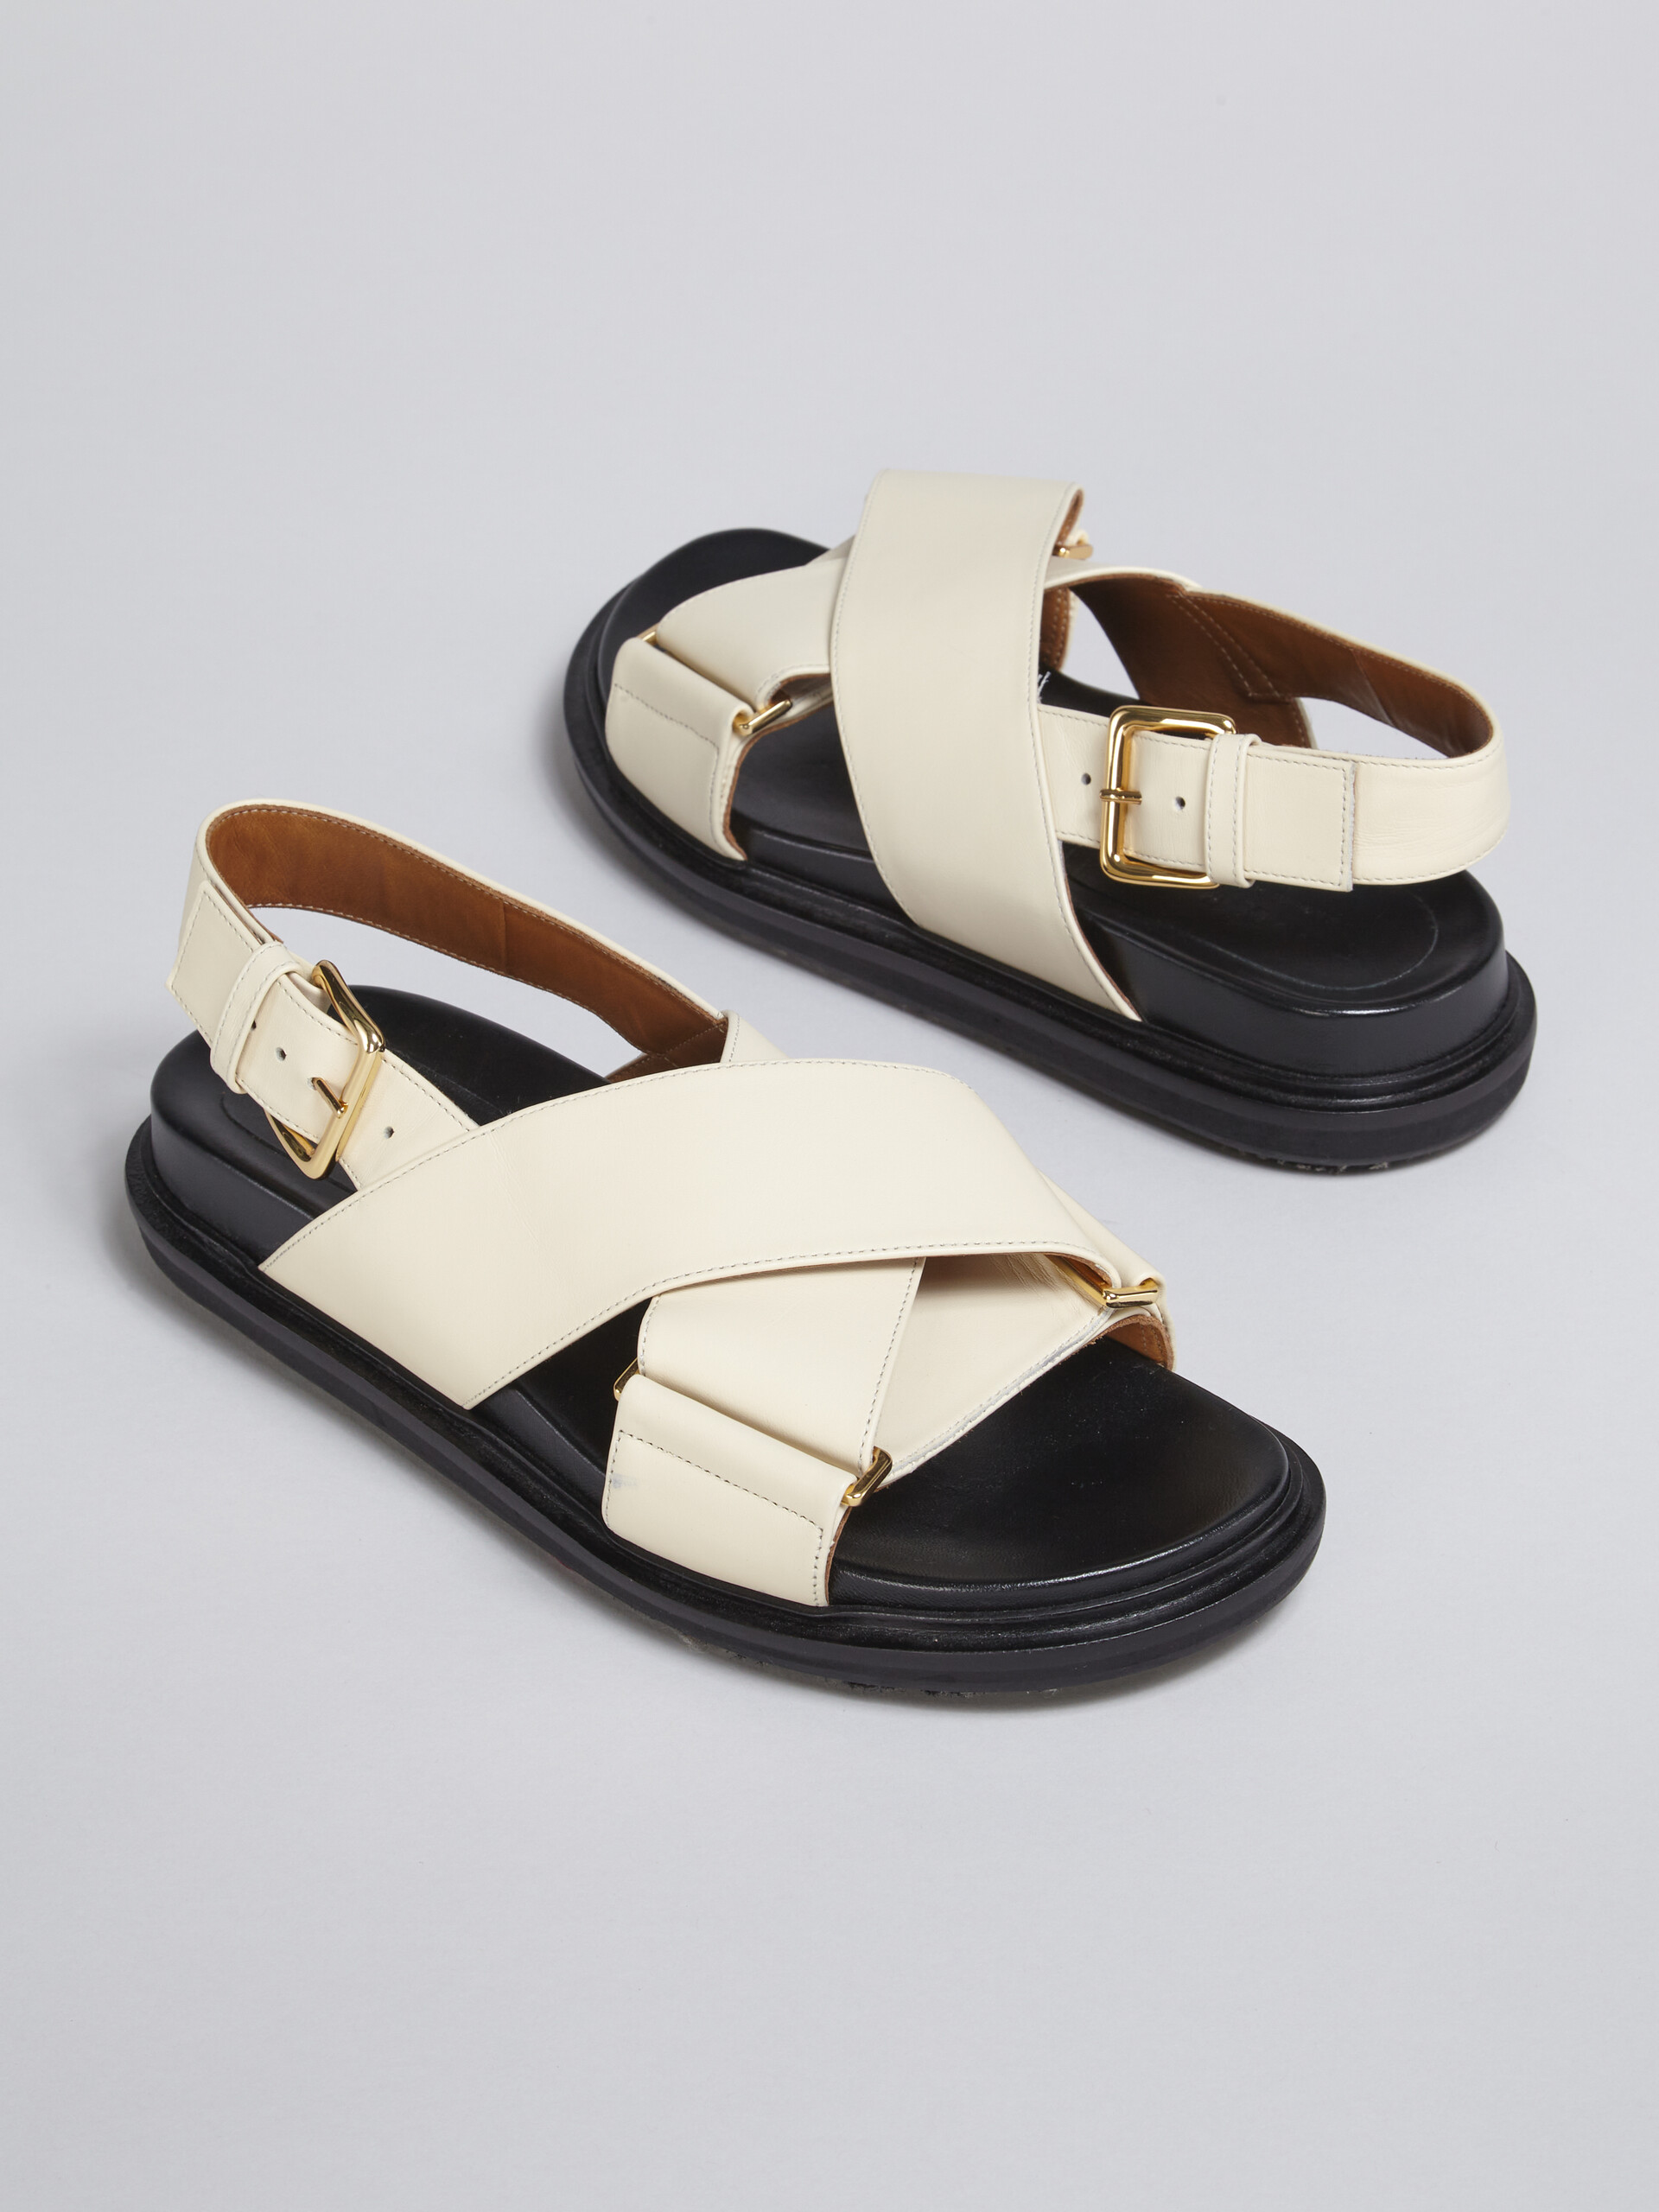 White leather Fussbett - Sandals - Image 5